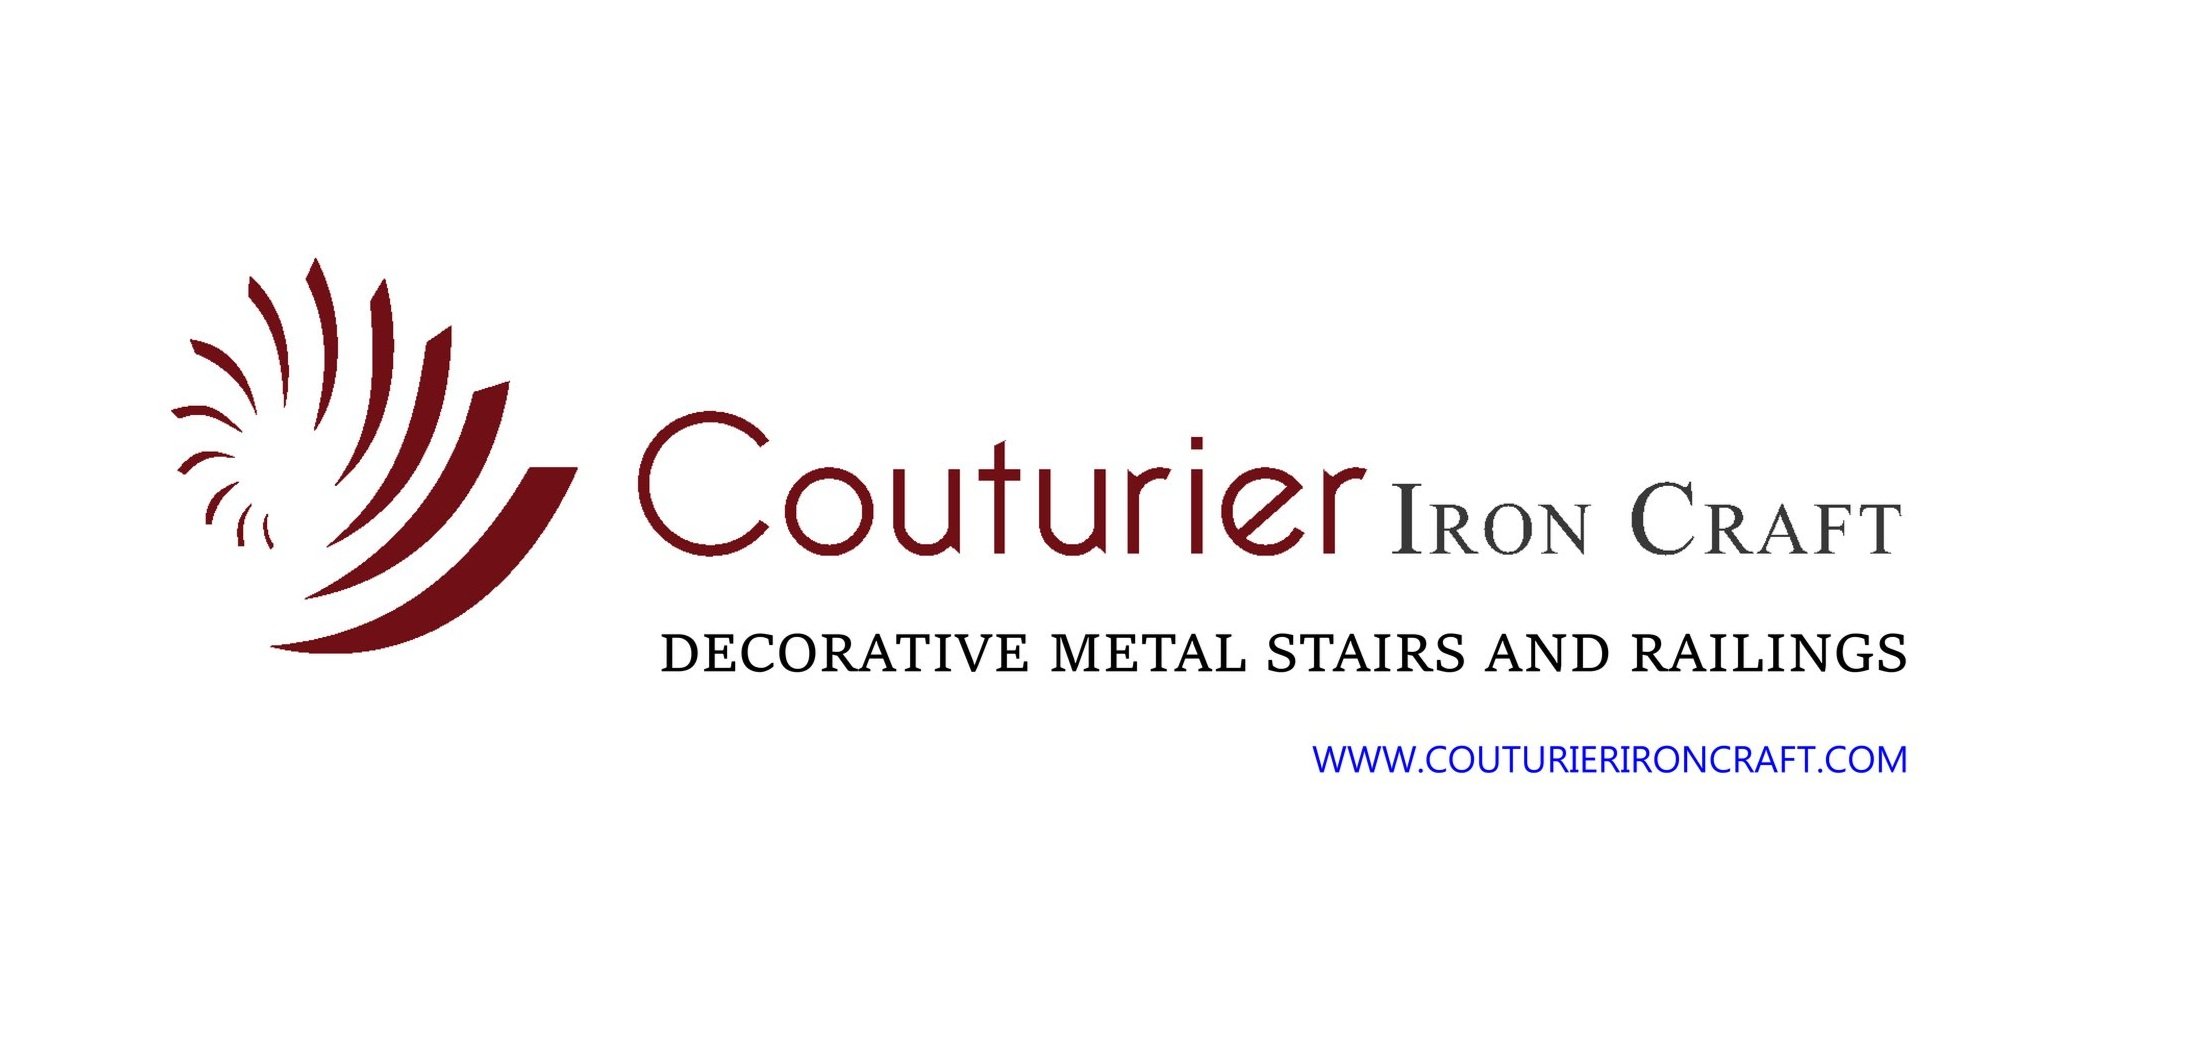 Couturier Iron Craft